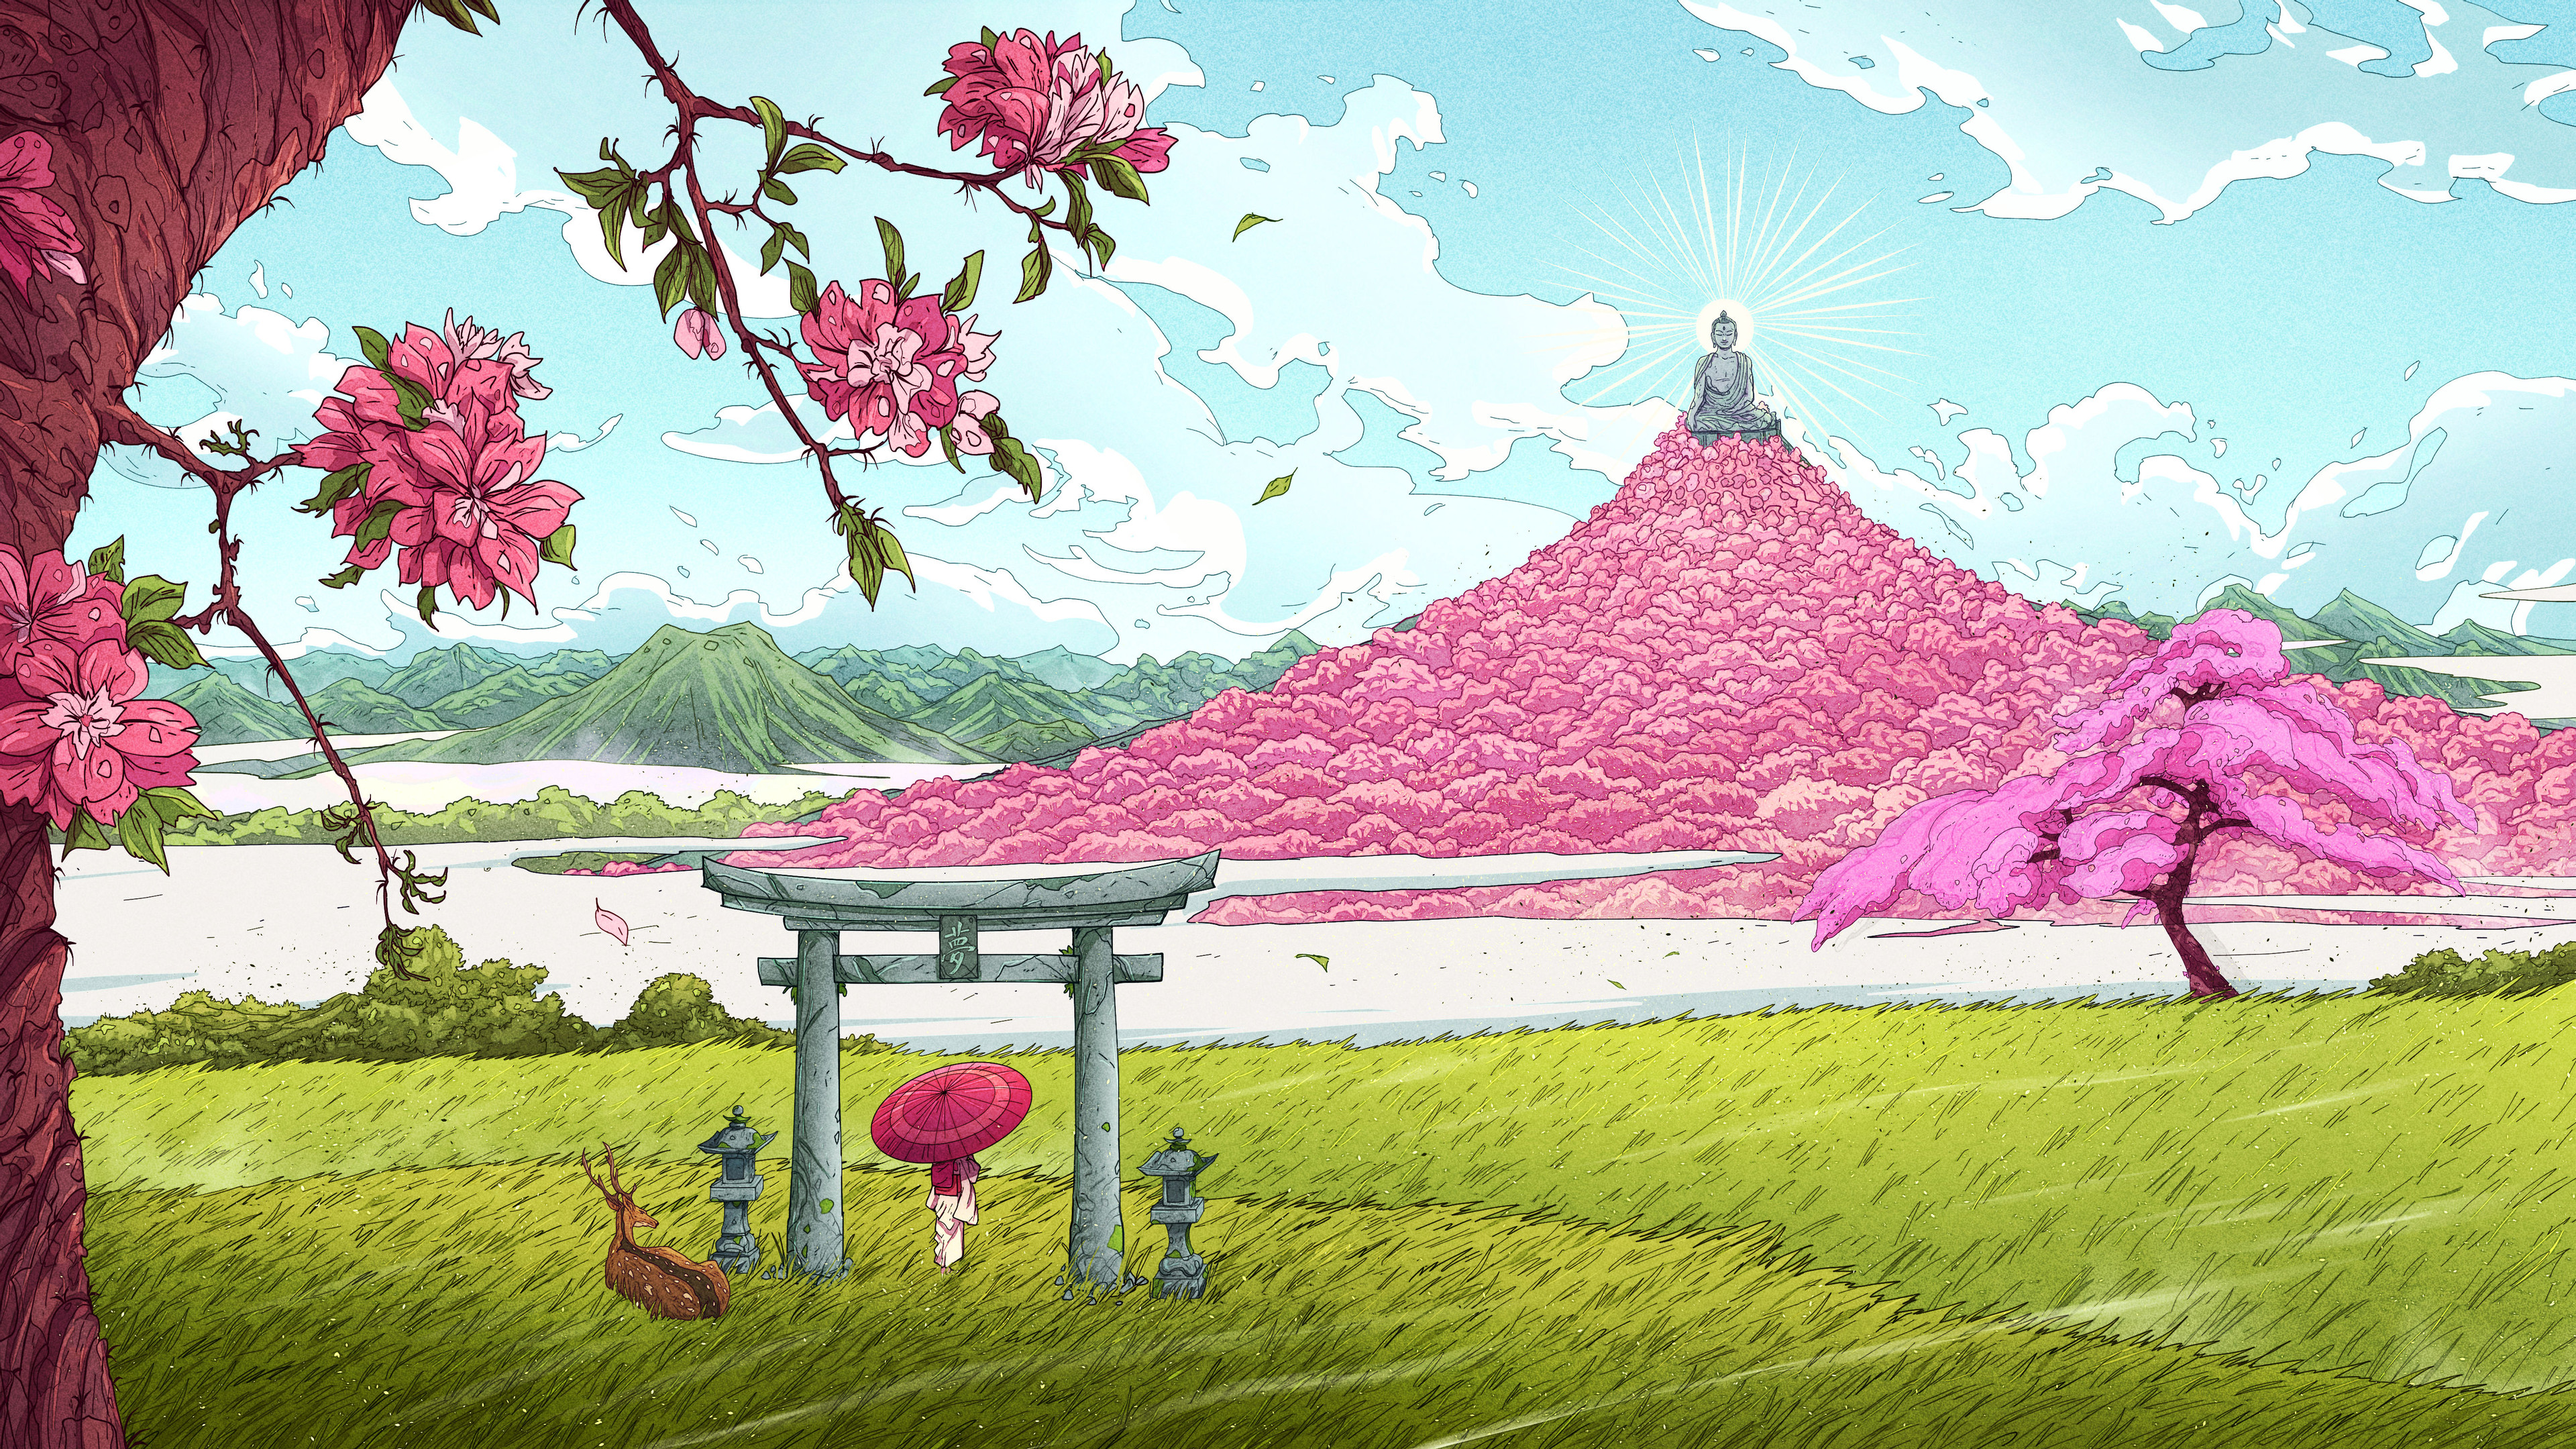 Christian Benavides Digital Art Fantasy Art Buddha Shinto Arch Deer Mountains Pink Trees Flowers Clo 3840x2160